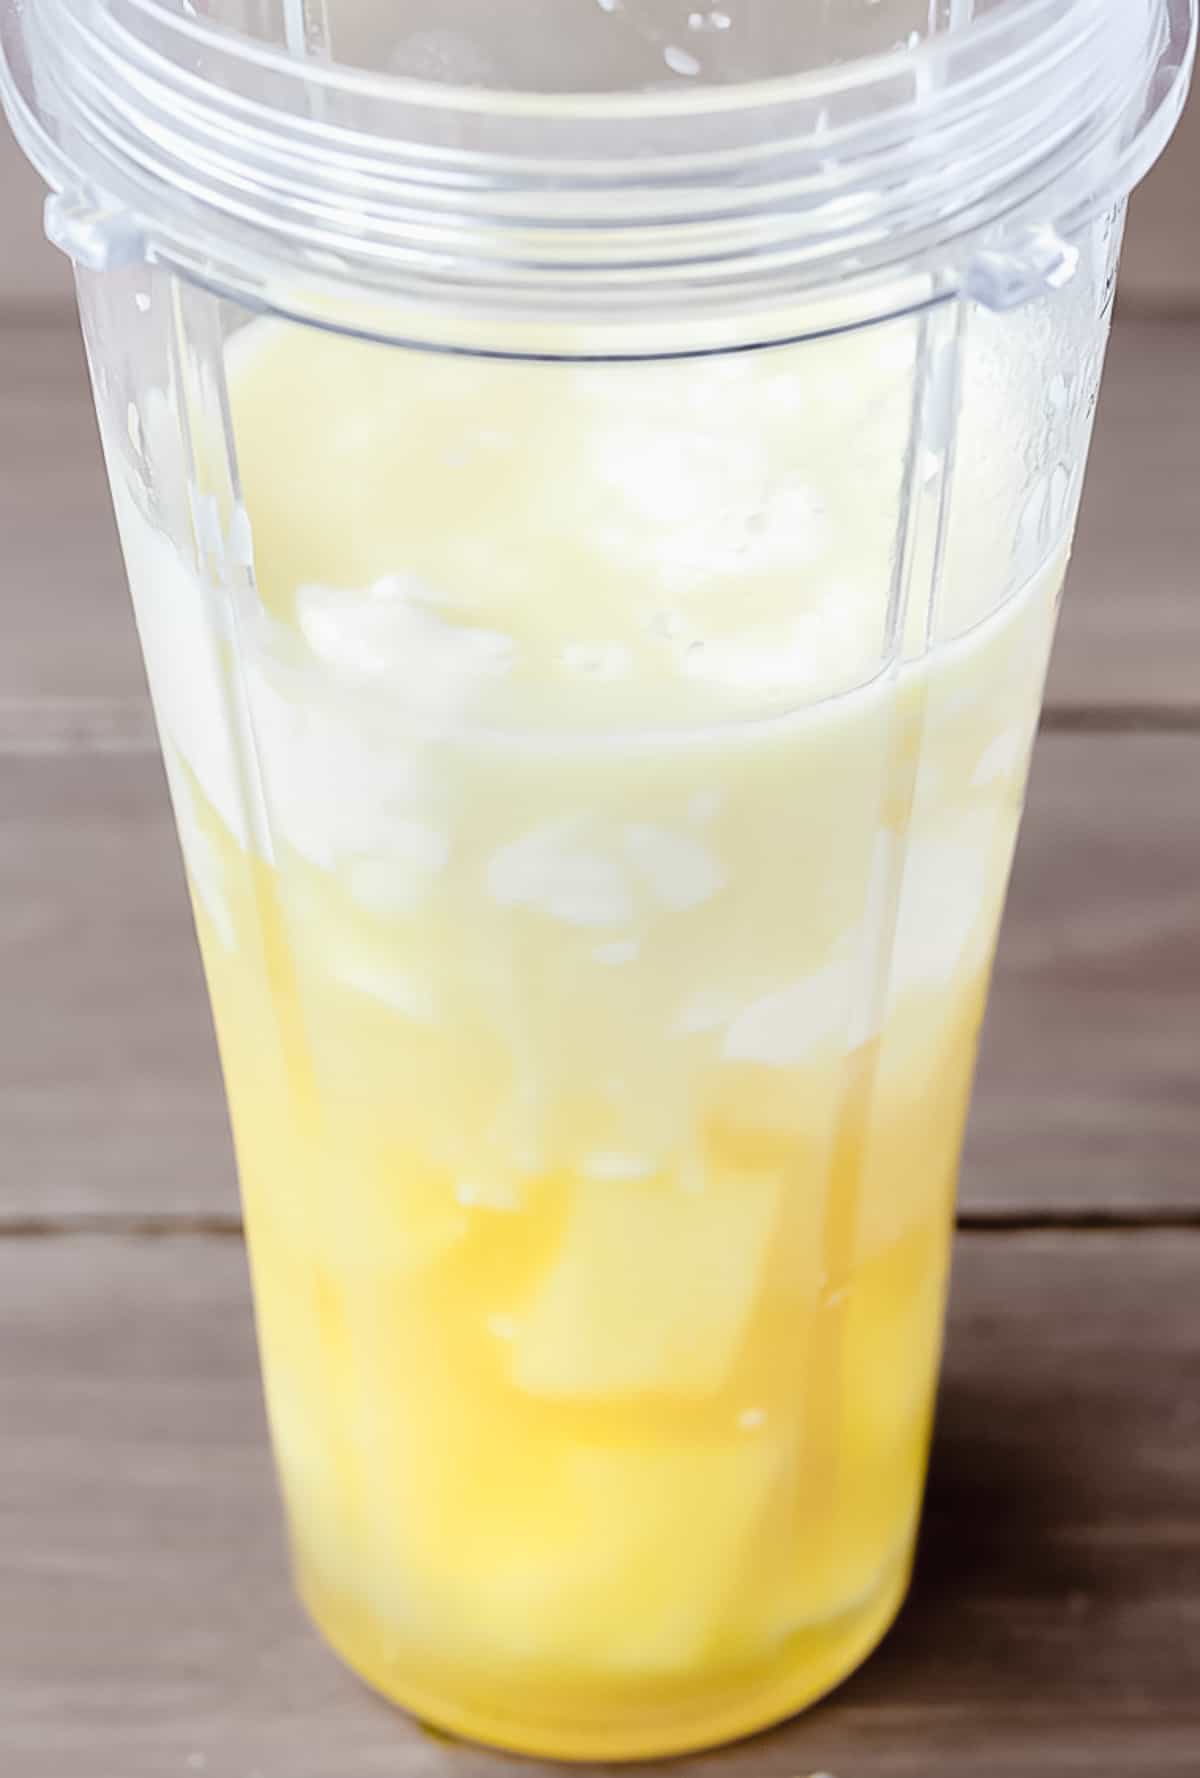 Pineapple smoothie ingredients in a blender cup